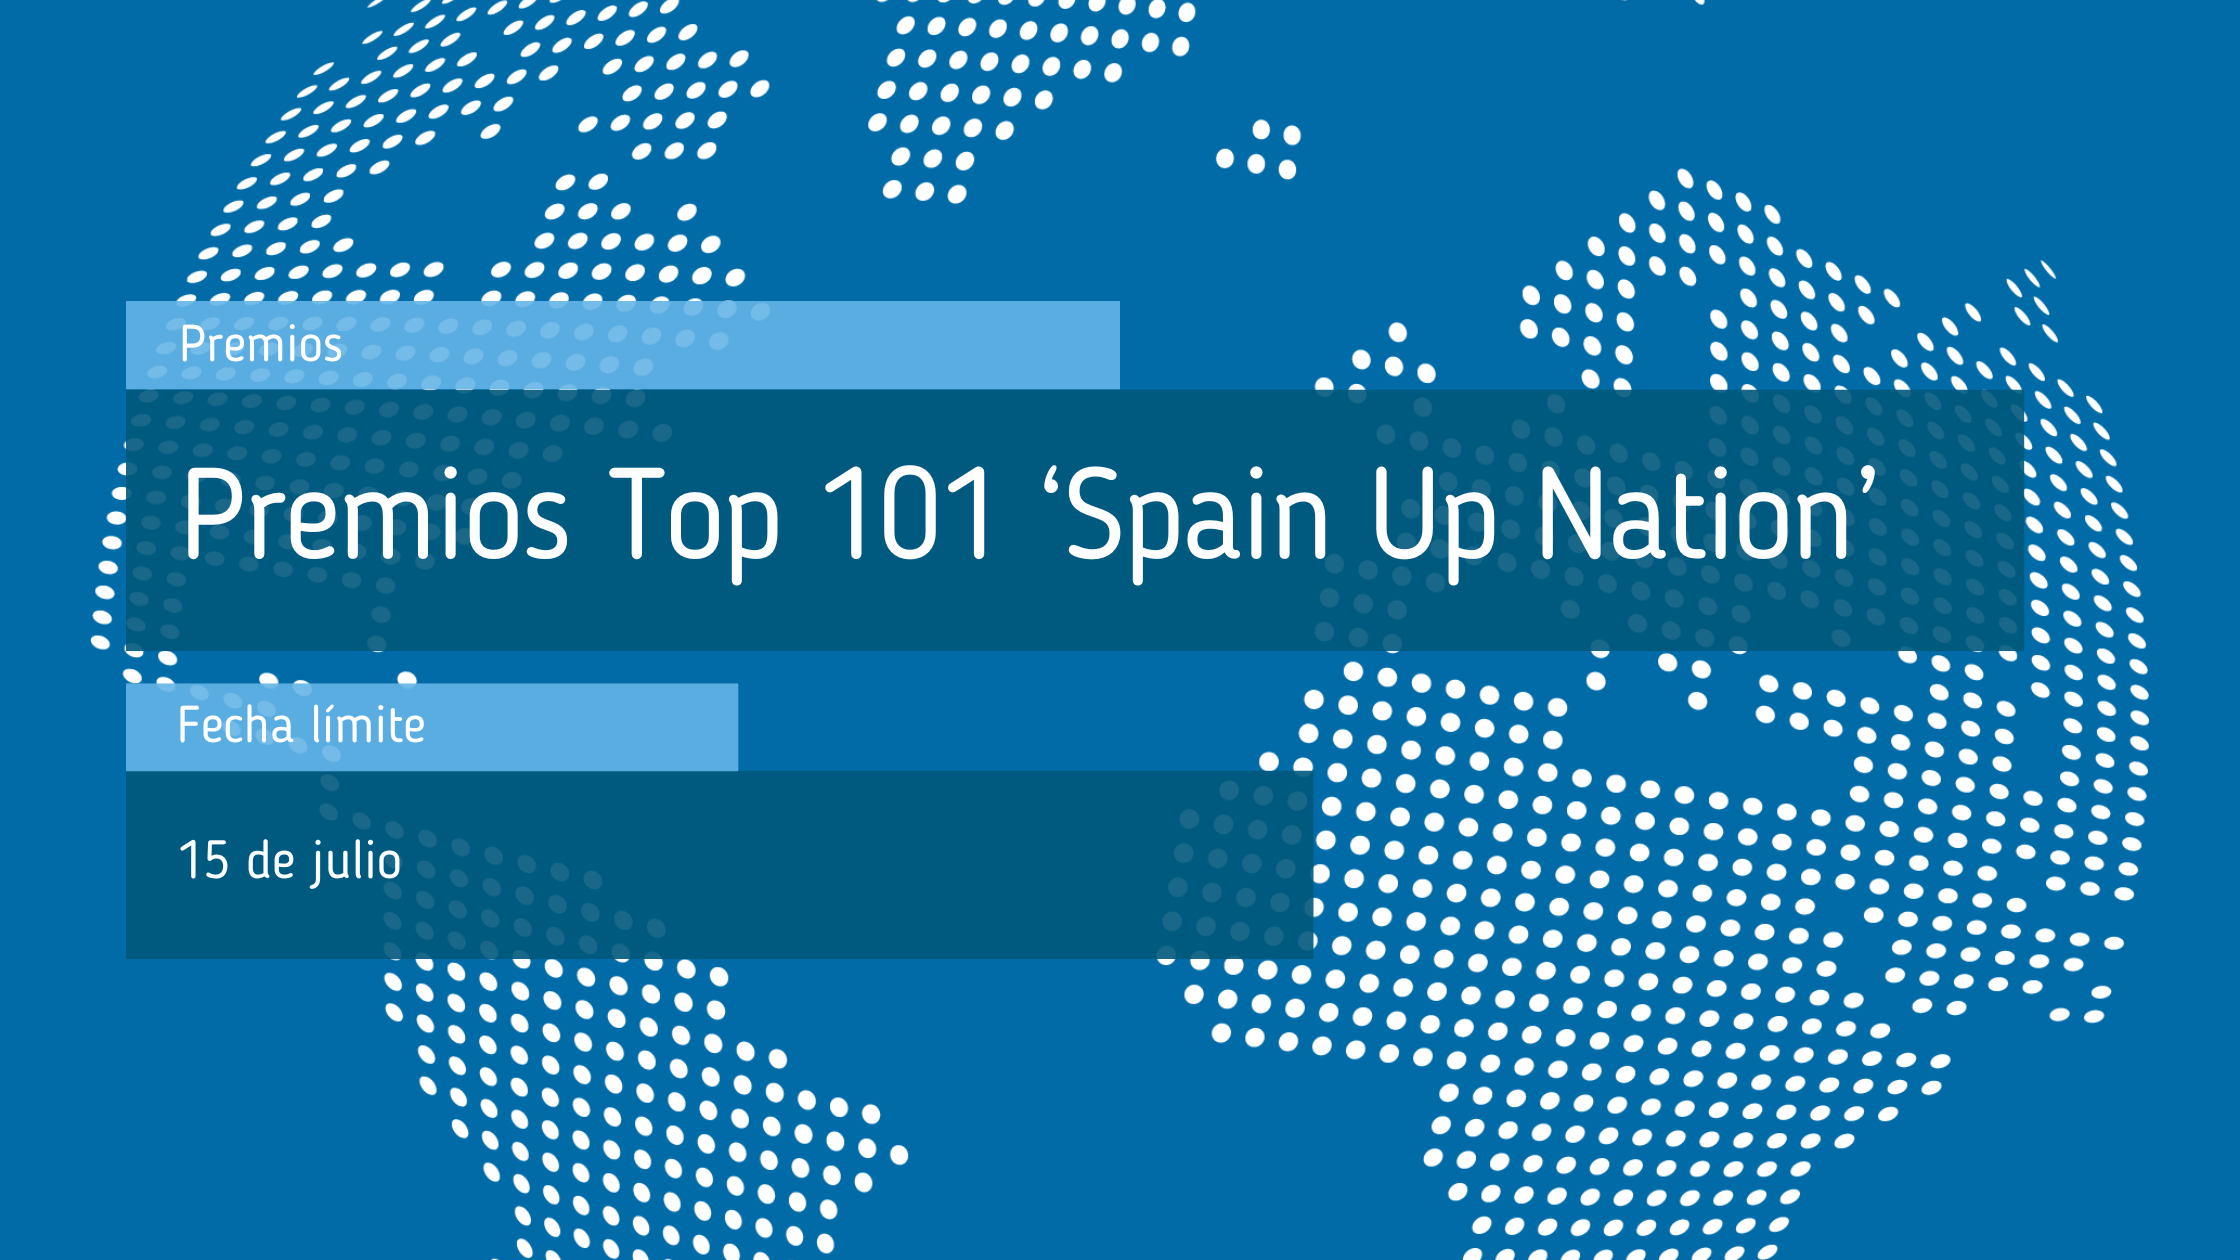 Premios_Top_101_Spain_Up_Nation